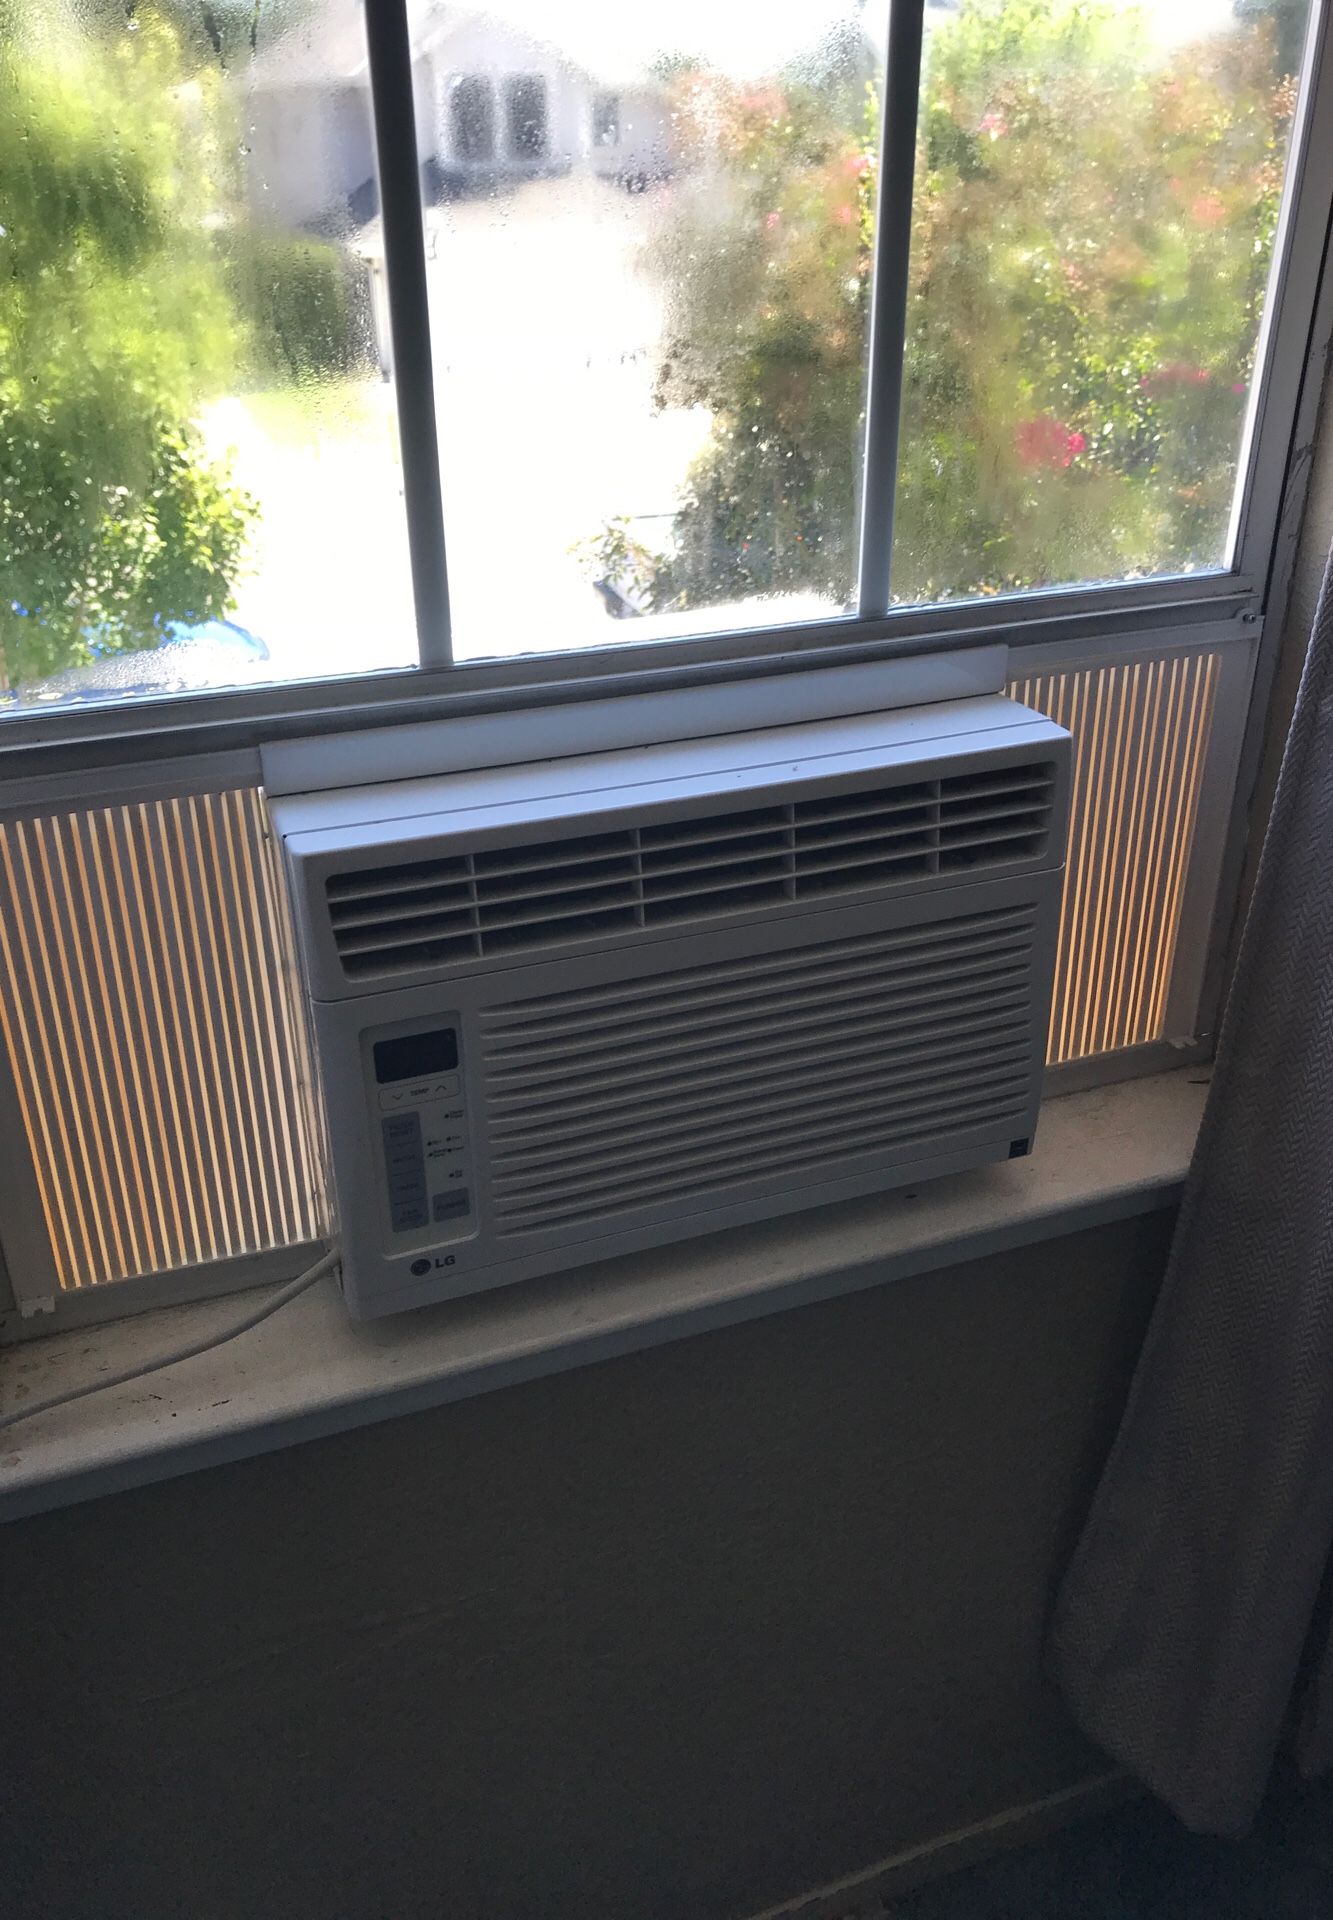 LG window AC unit